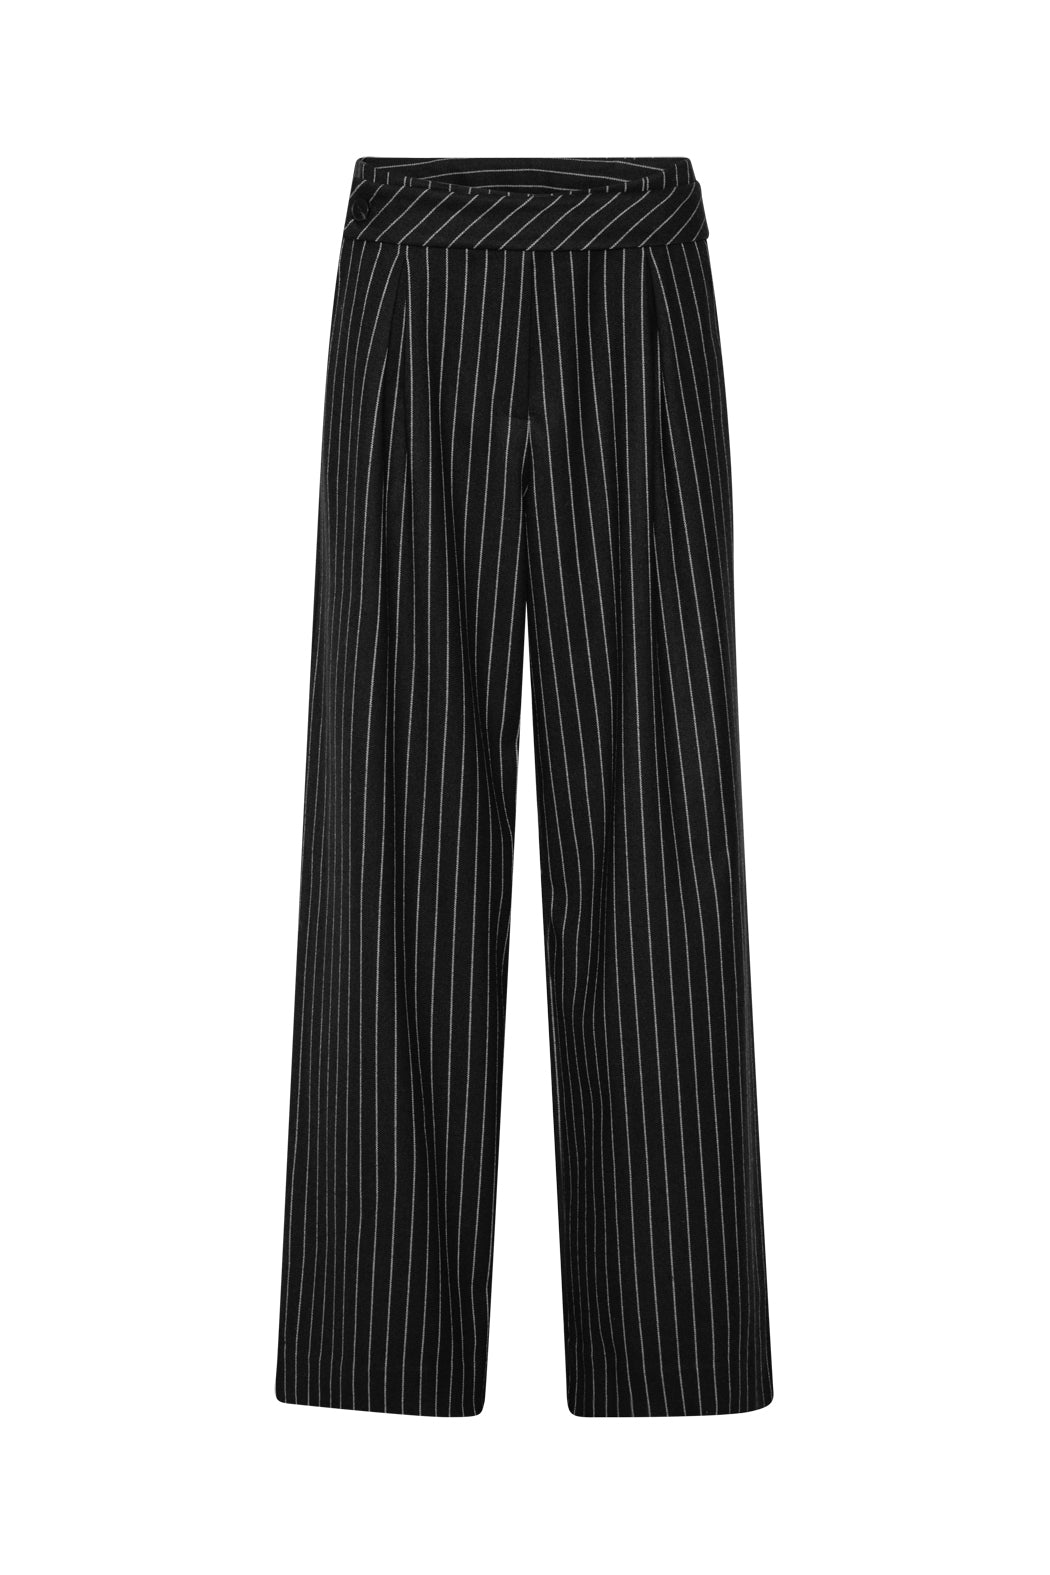 Striped Wide Pants Black Comb.